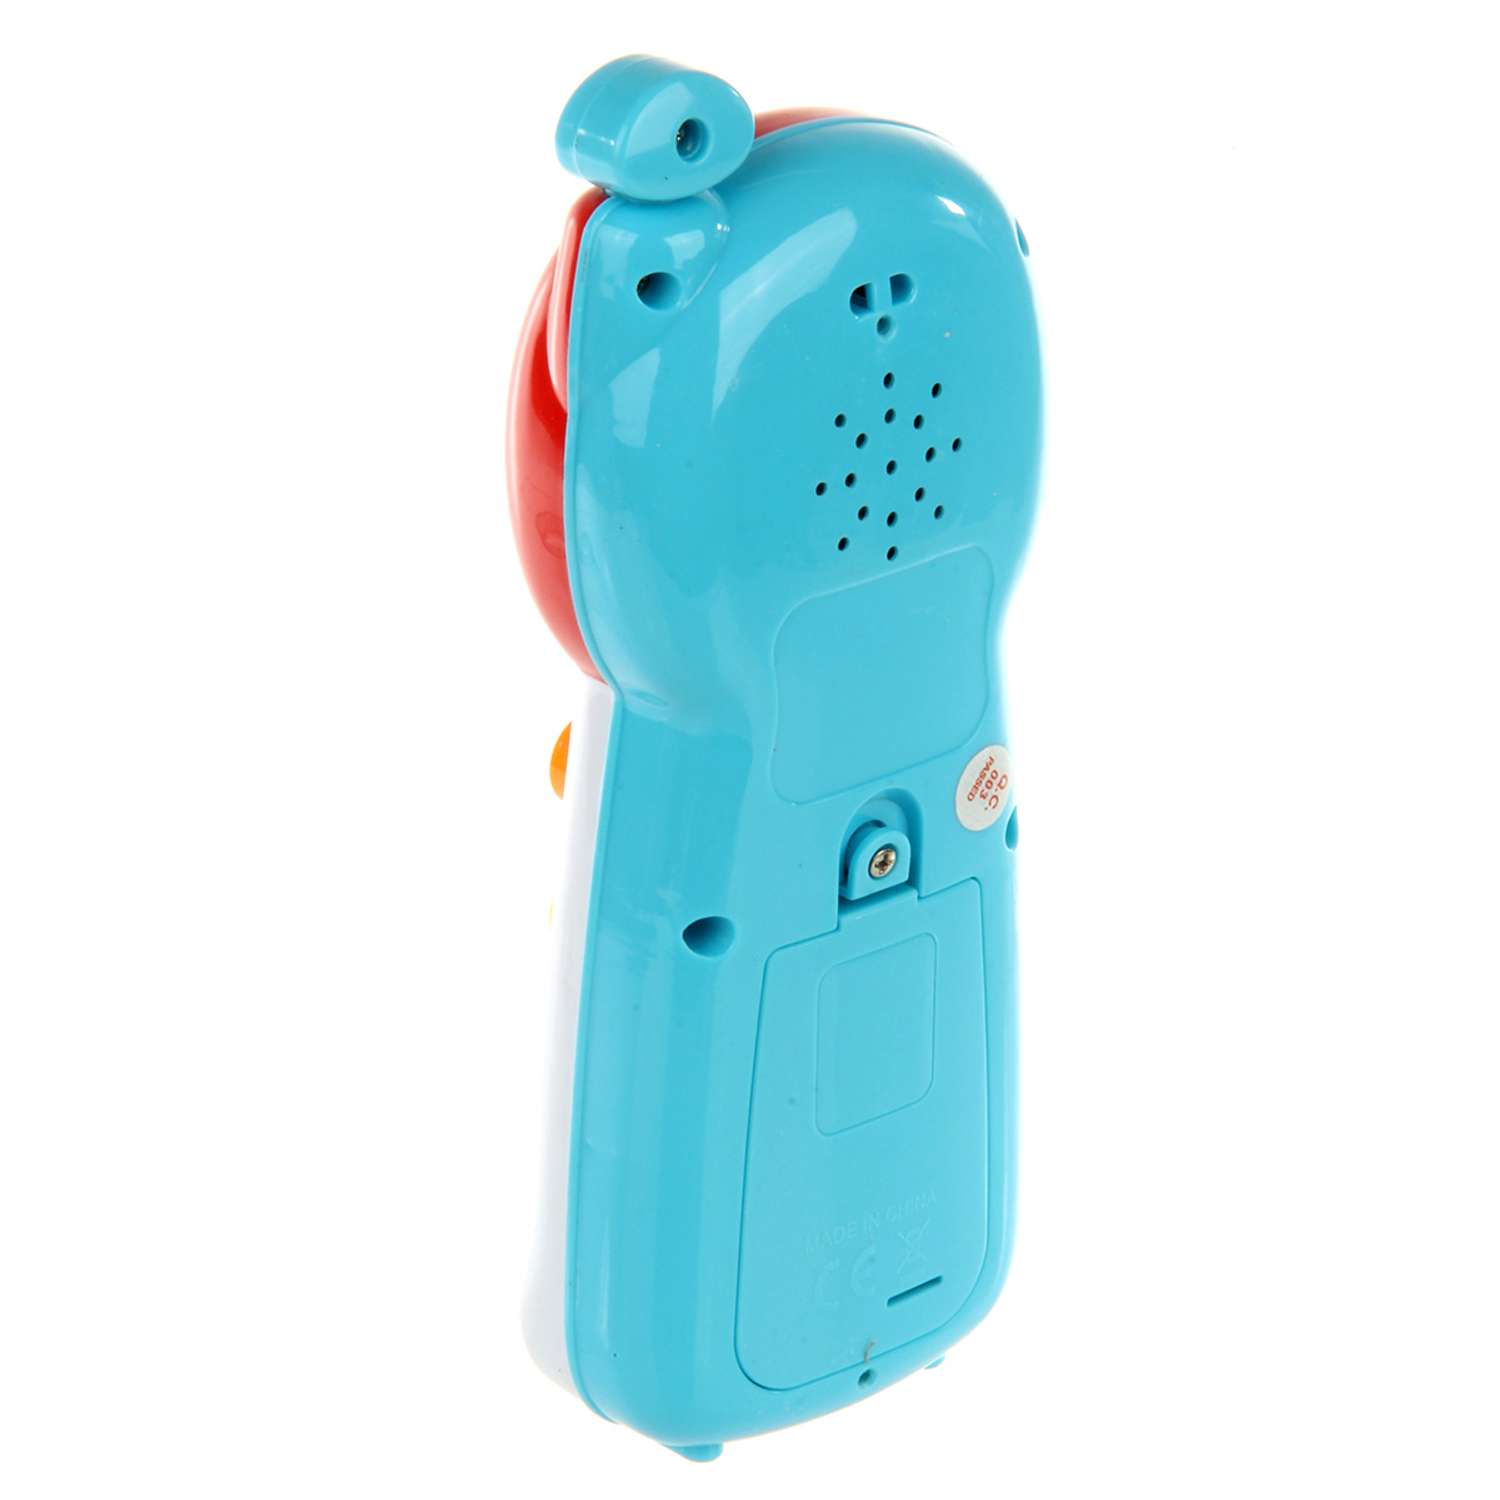 Развивающая игрушка Veld Co Телефон со звуками и светом - фото 4